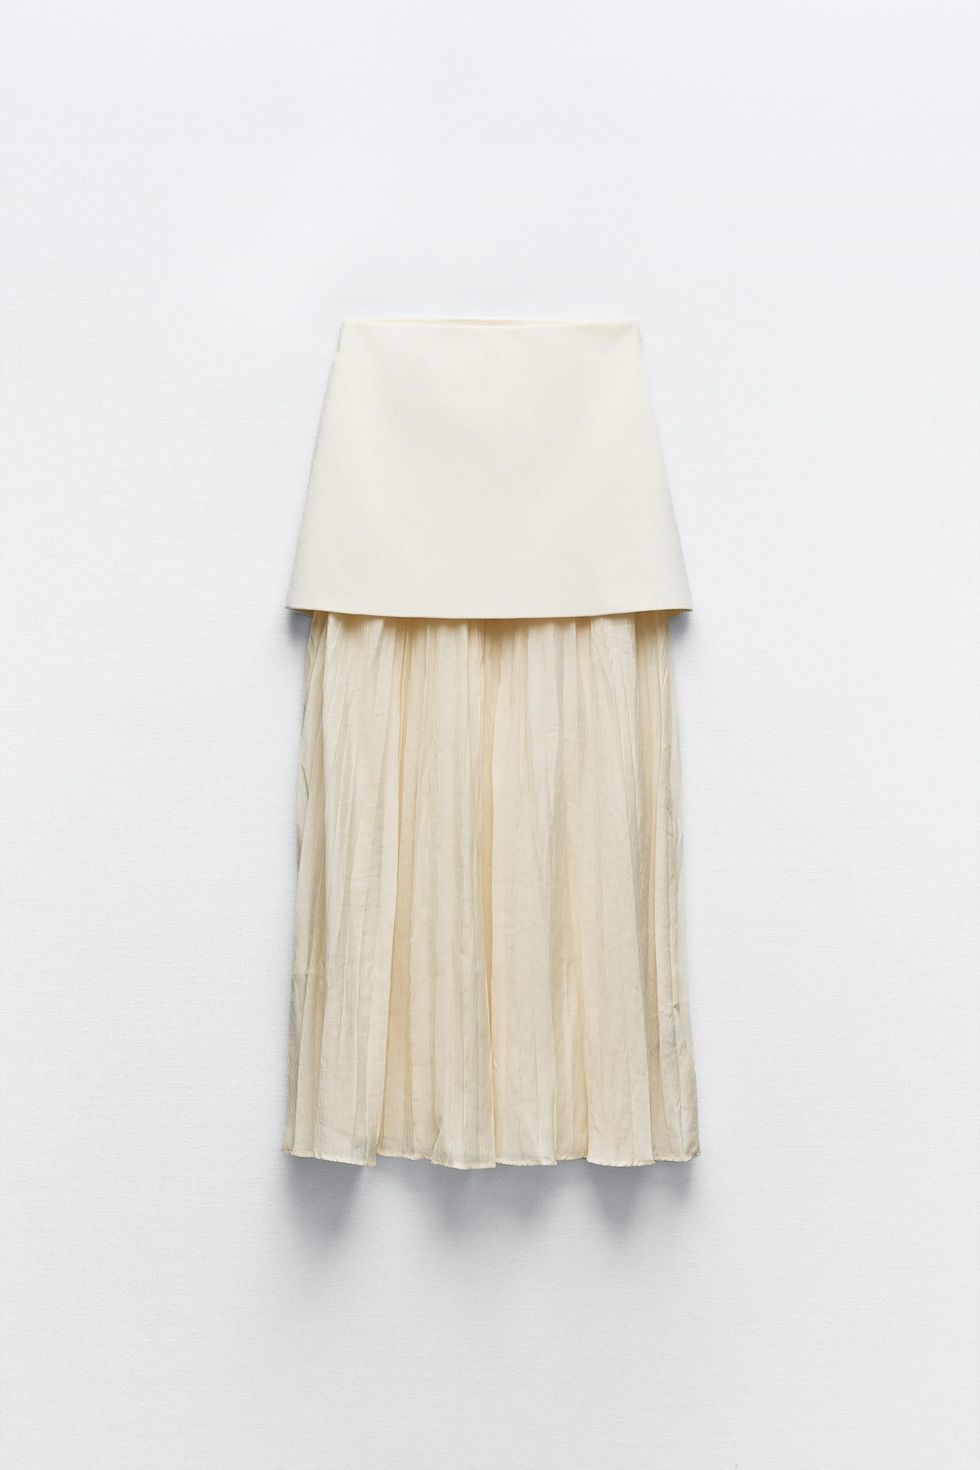 Falda blanca